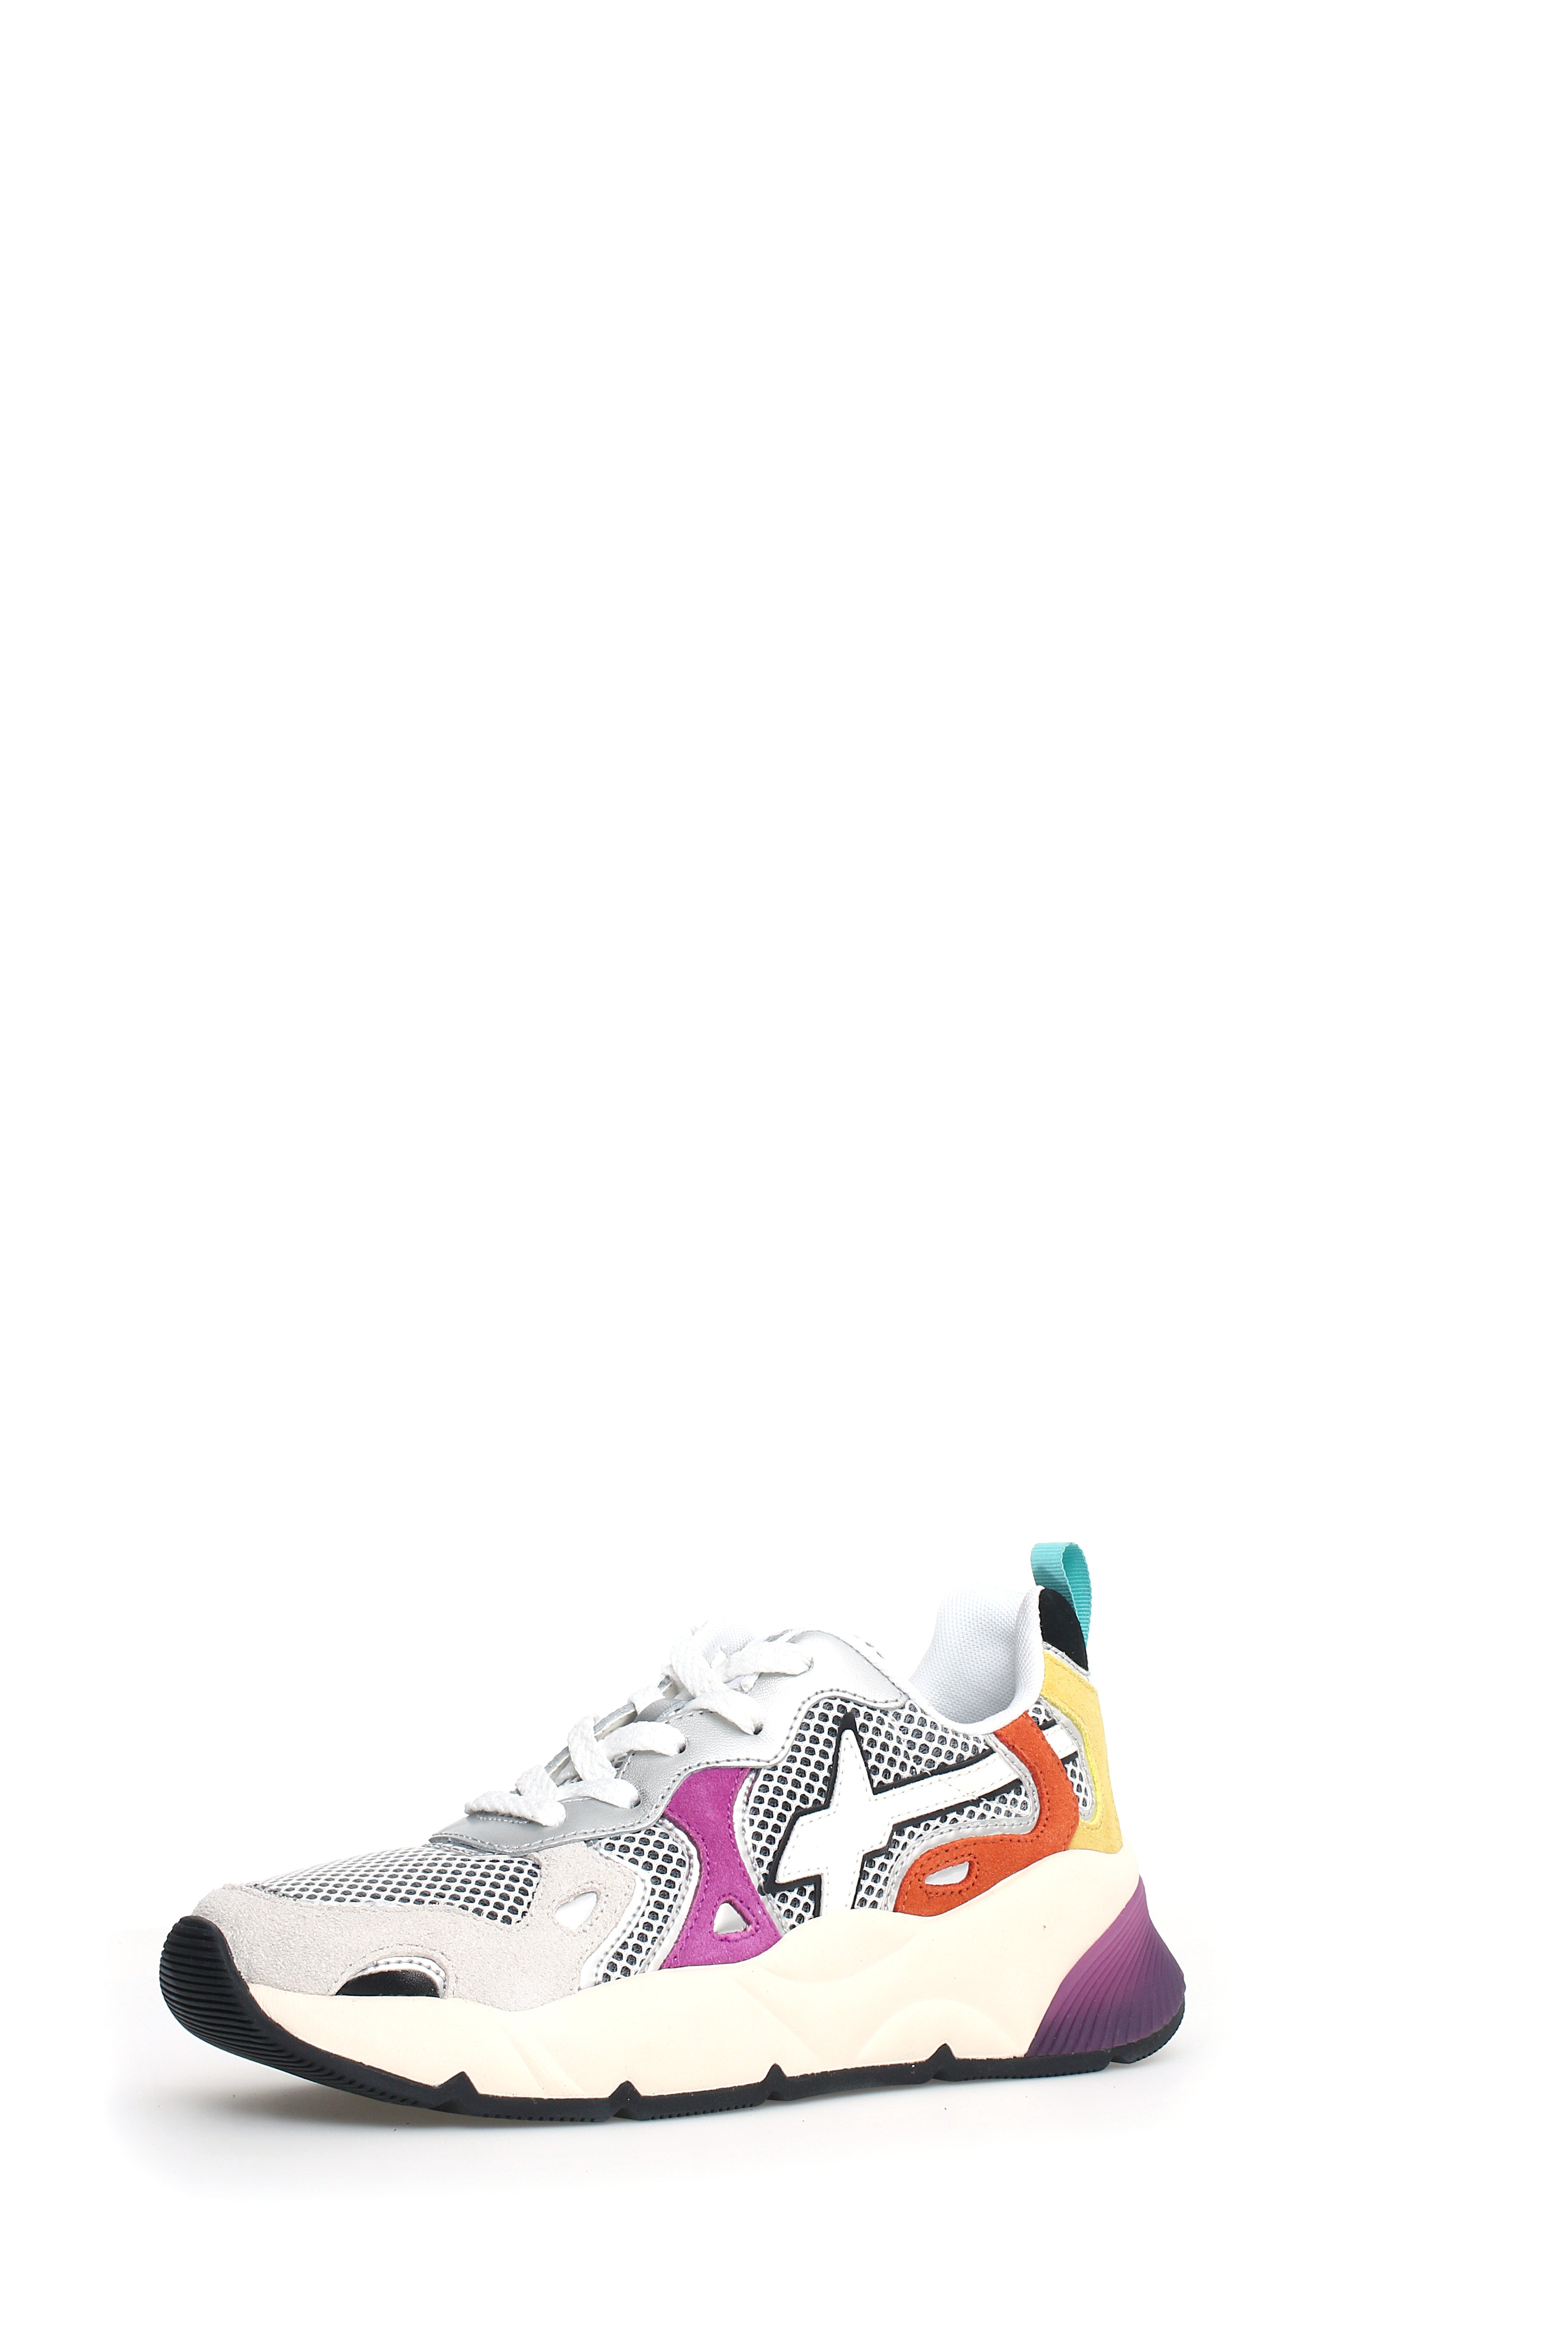 W6YZ-Sneaker Donna Sarah W-White Multicolor